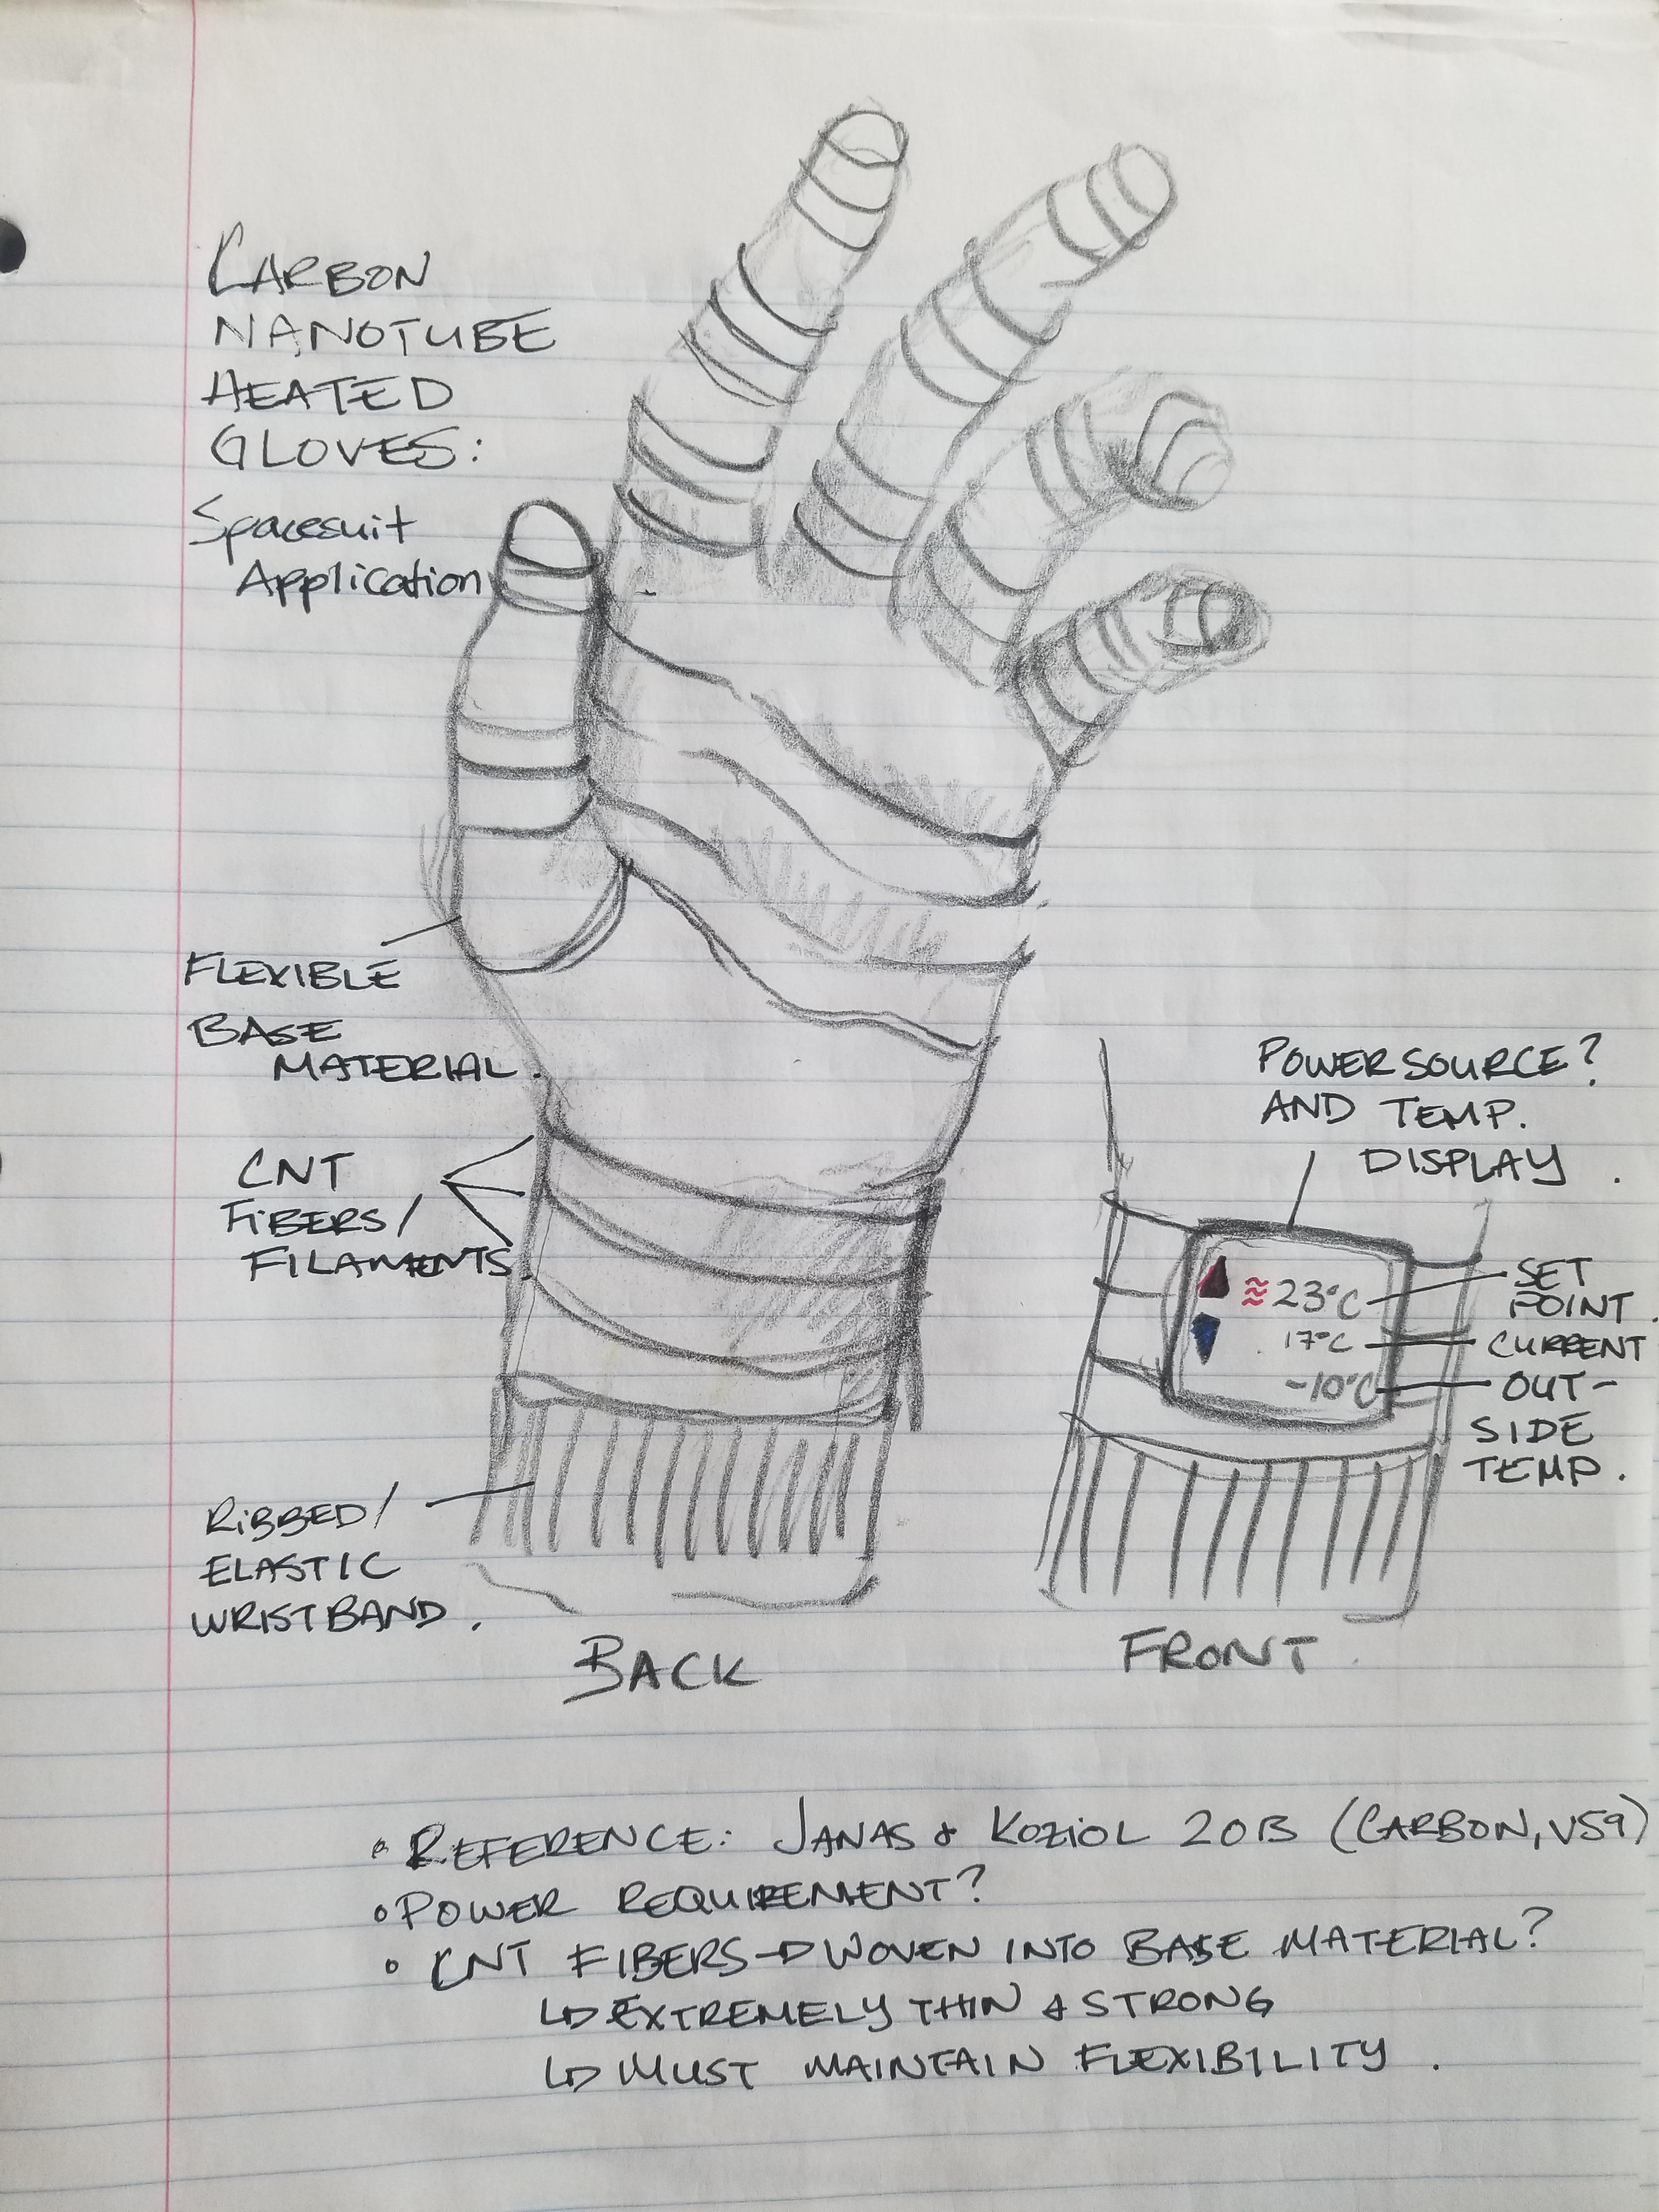 Carbon Nanotube Heated Gloves